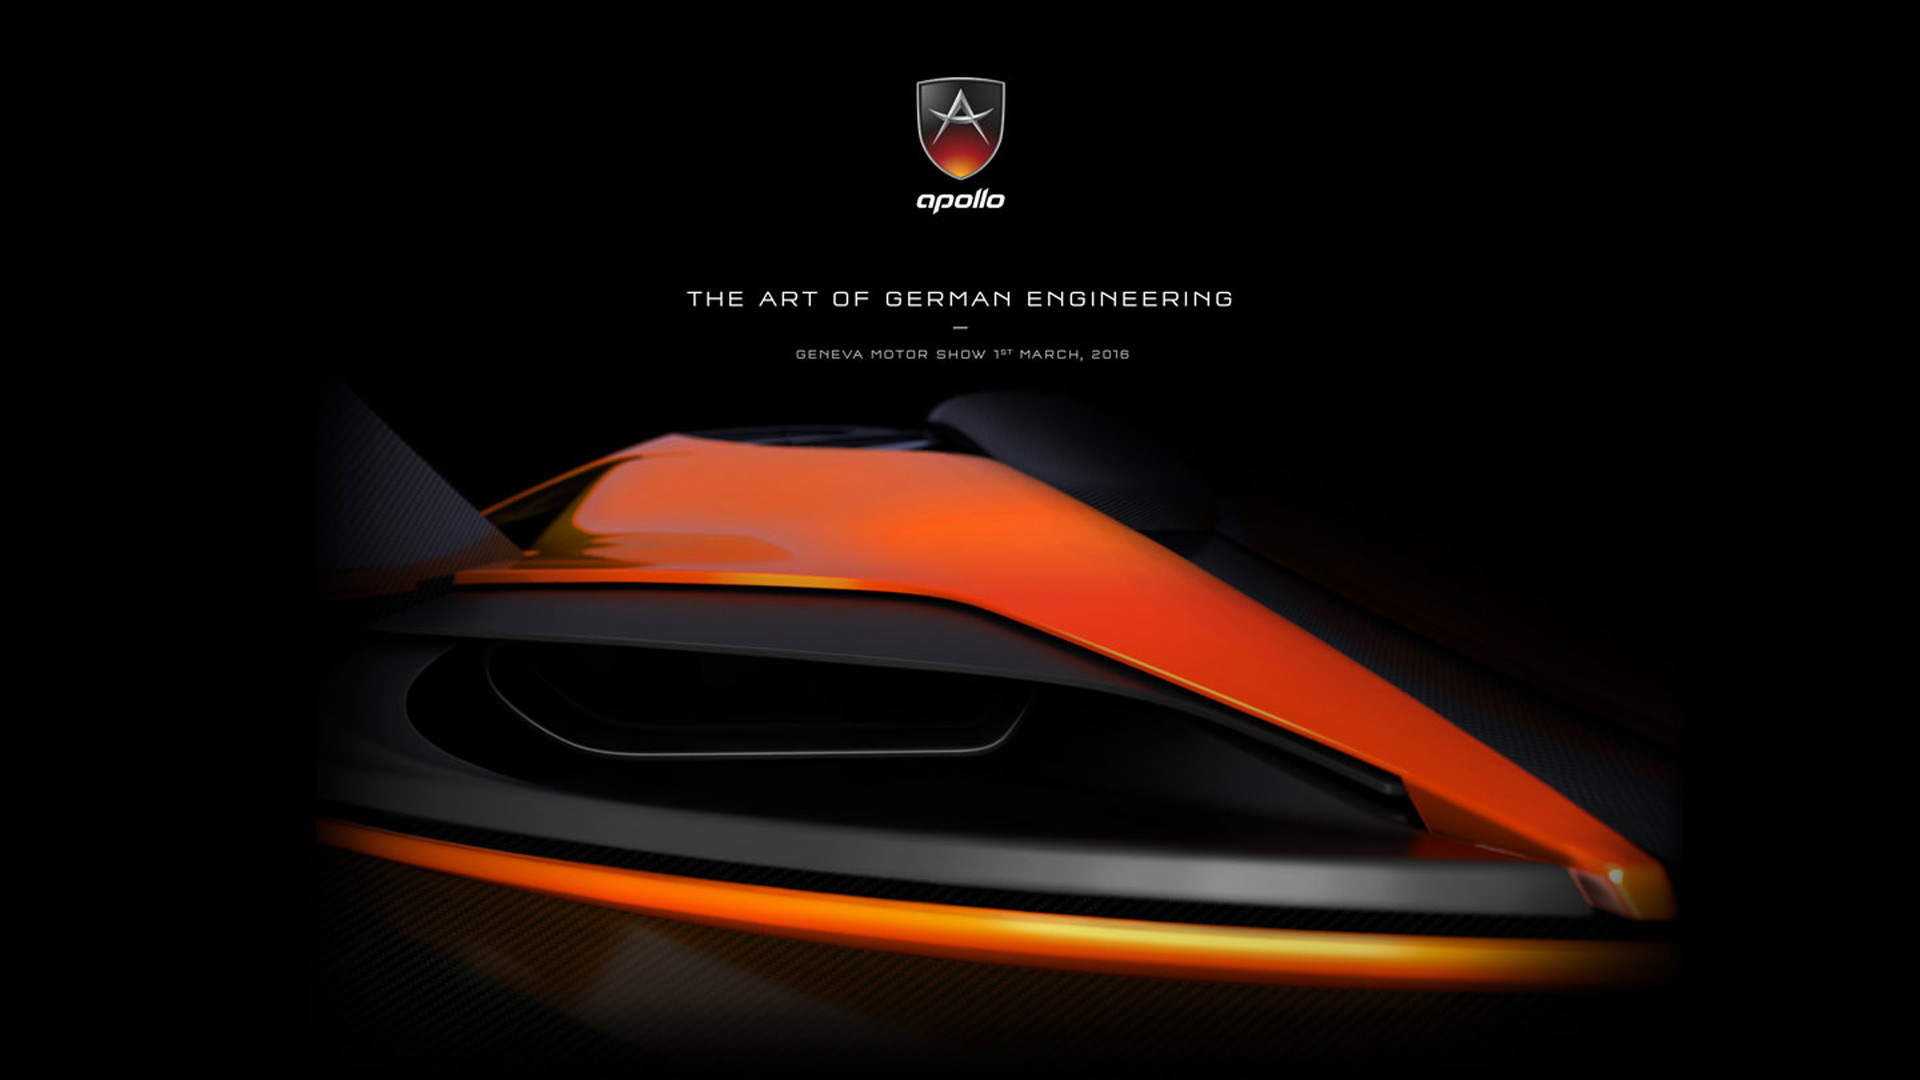 Teaser for Apollo’s new car debuting at 2016 Geneva Motor Show